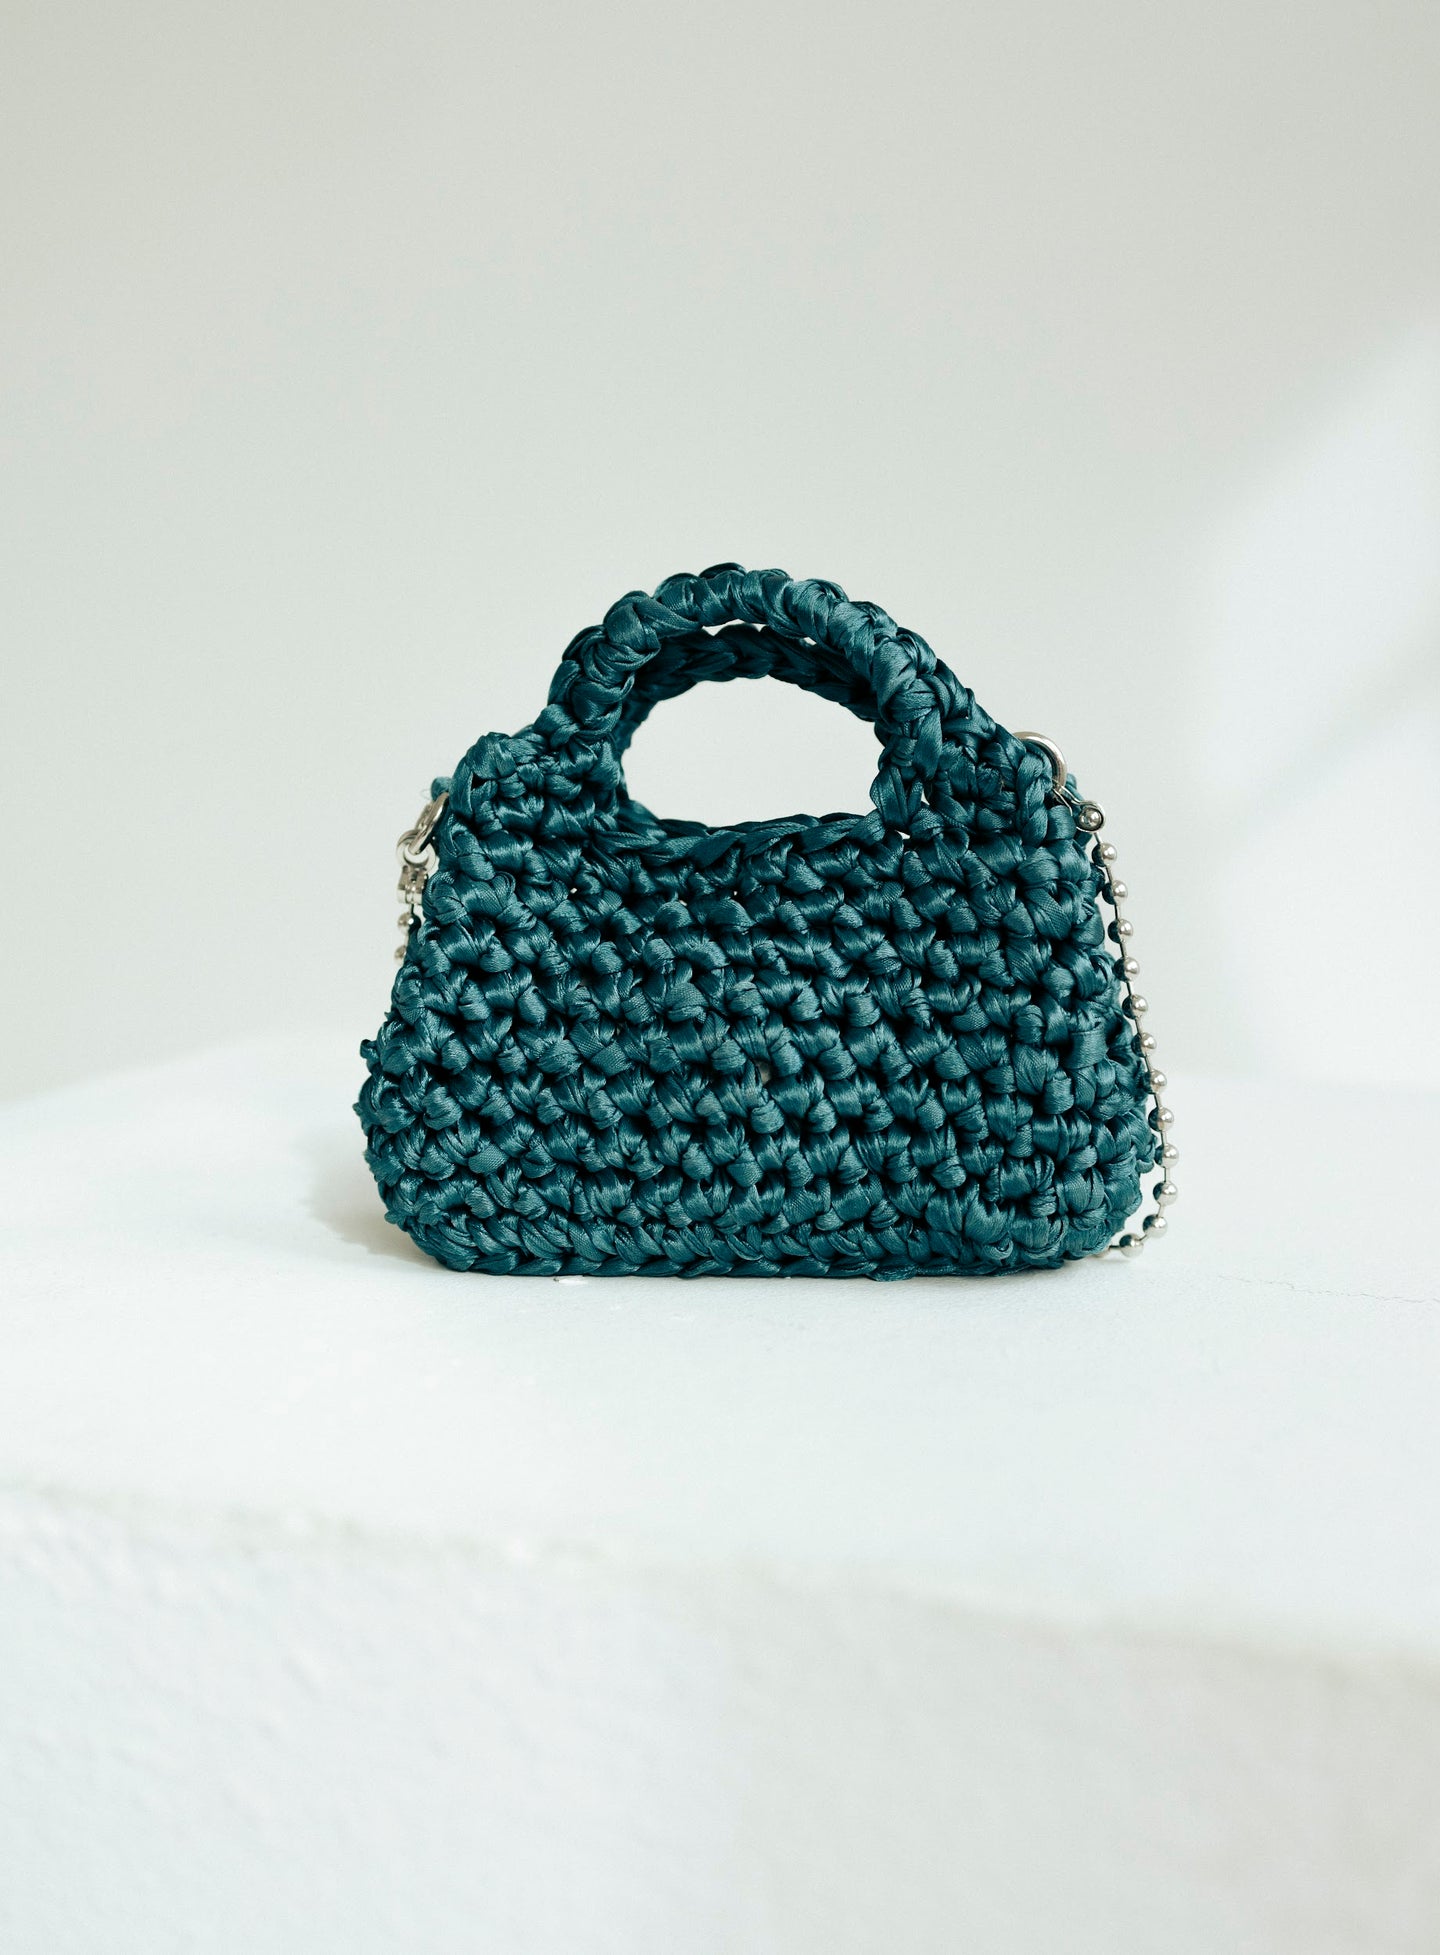 Teal Blue mini crochet bag